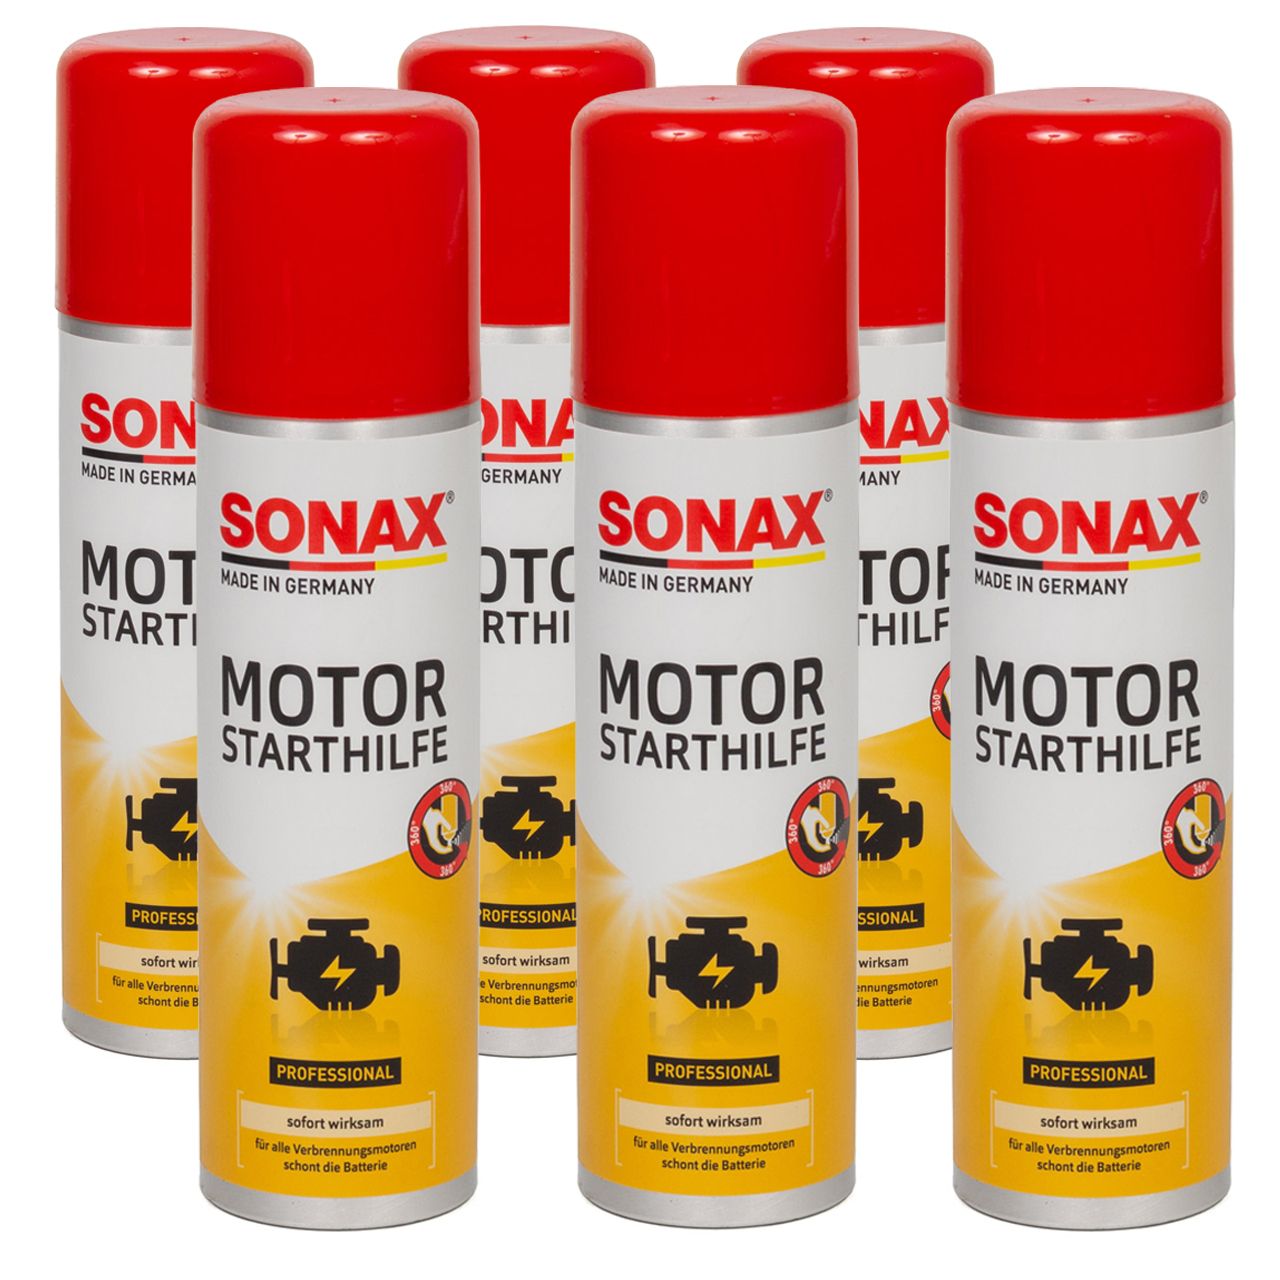 SONAX 312100 Motor Starthilfe Starpilot Starthilfespray Starterspray 6x 250ml